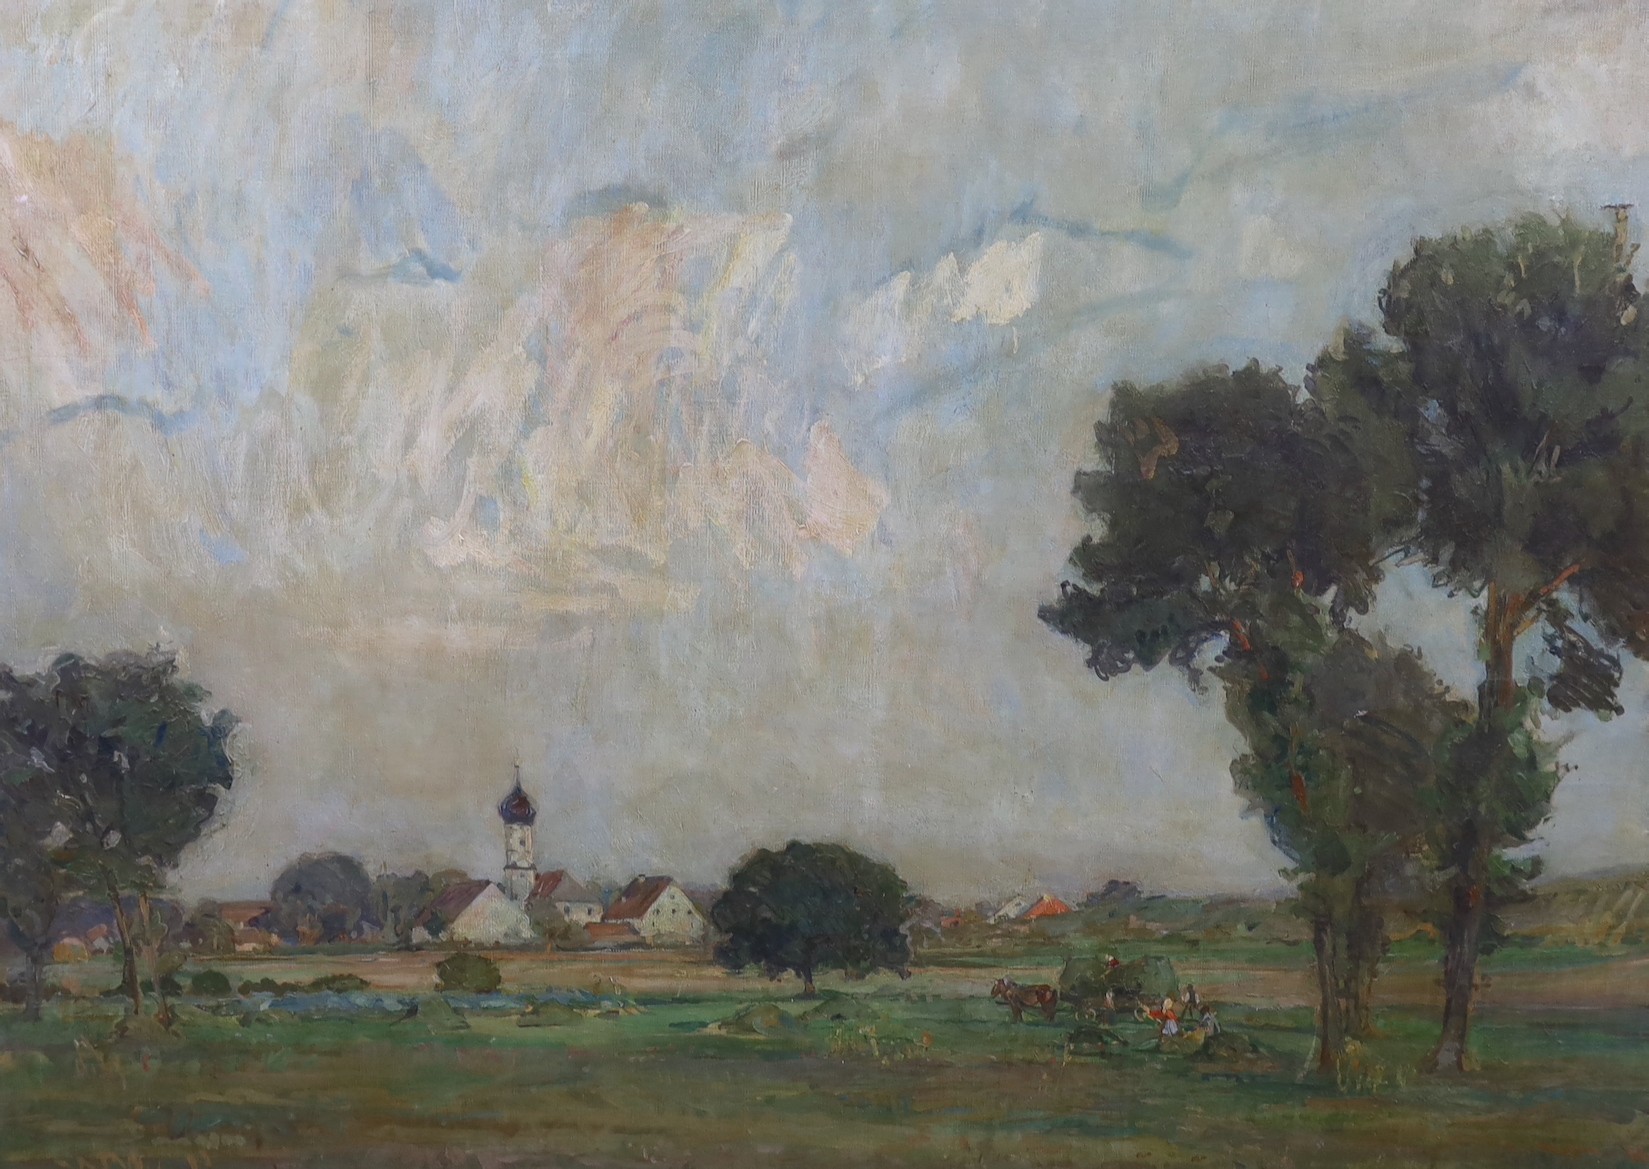 Robert Friedrich Karl Scholtz (German, 1877-1918), Extensive Eastern European landscape with church steeple, oil on canvas, 109 x 146cm